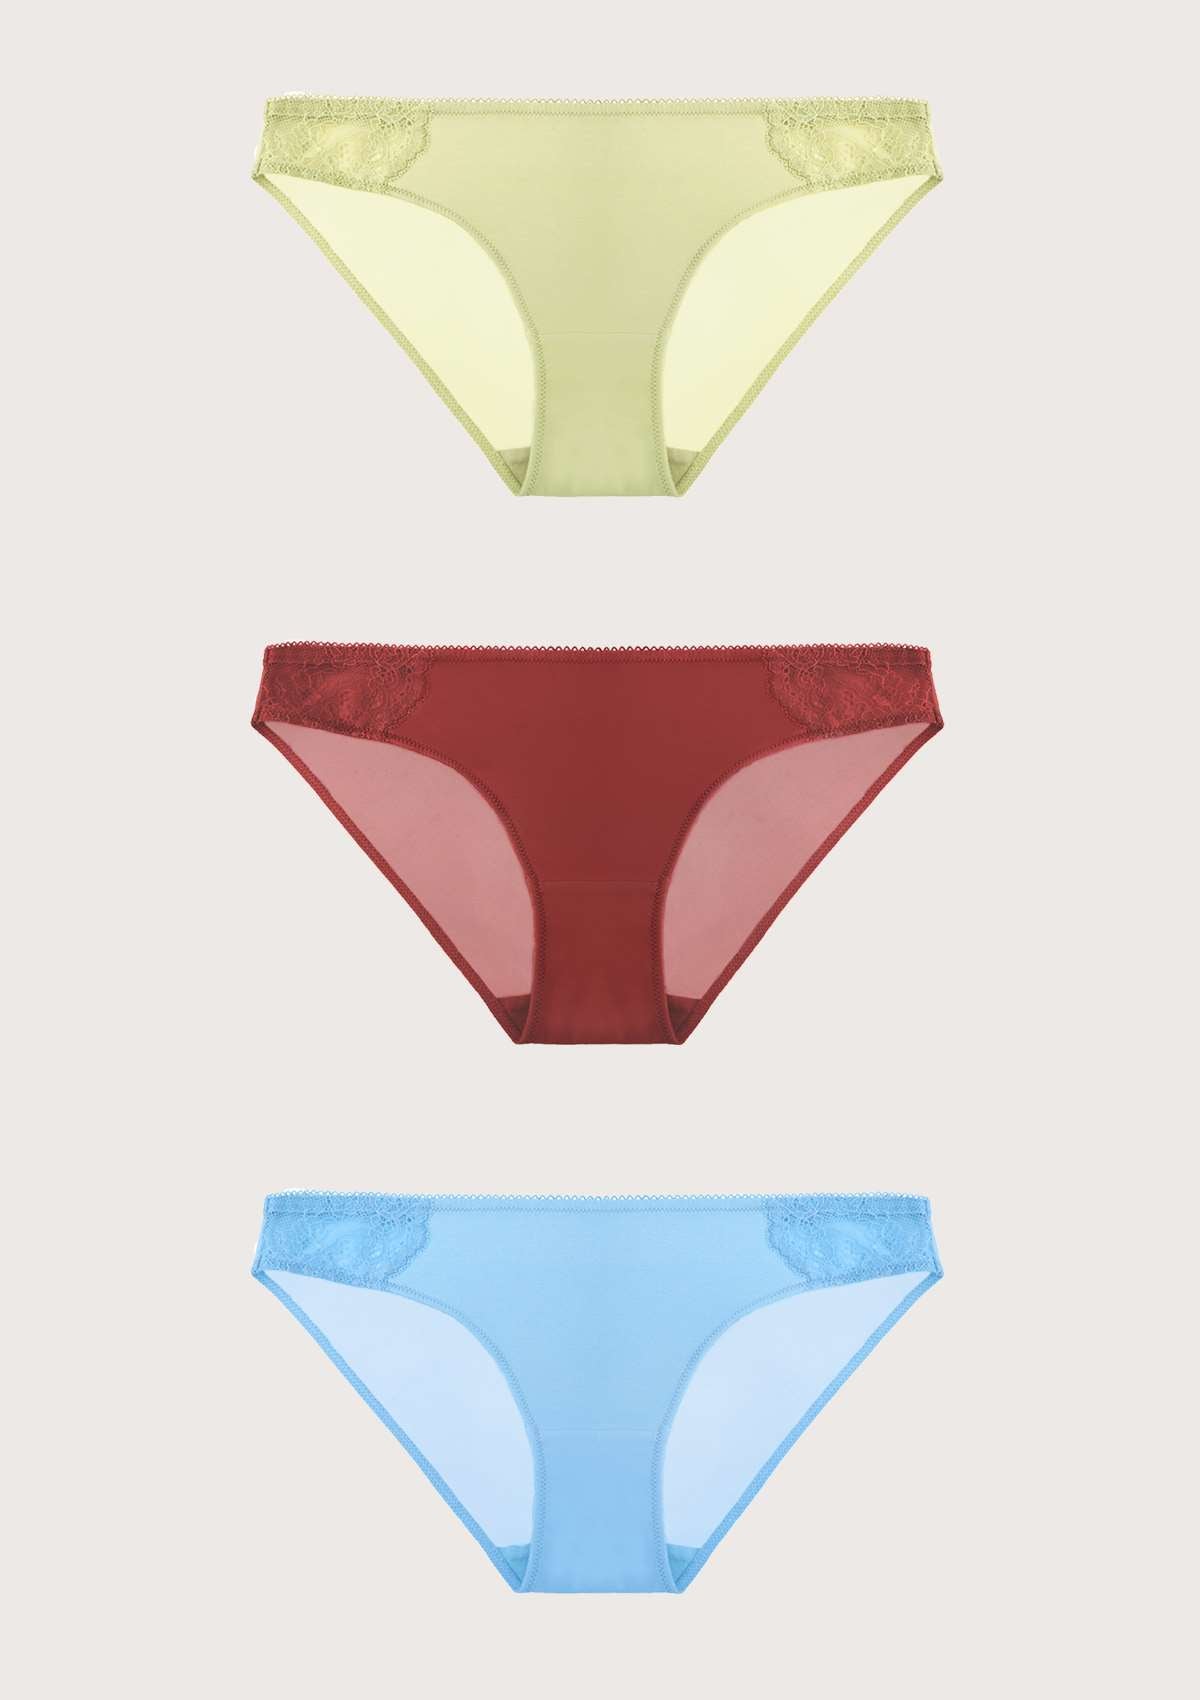 HSIA Soft Stretch Lace Bikini Panties 3 Pack - XXL / Light Green+Crimson+Light Blue